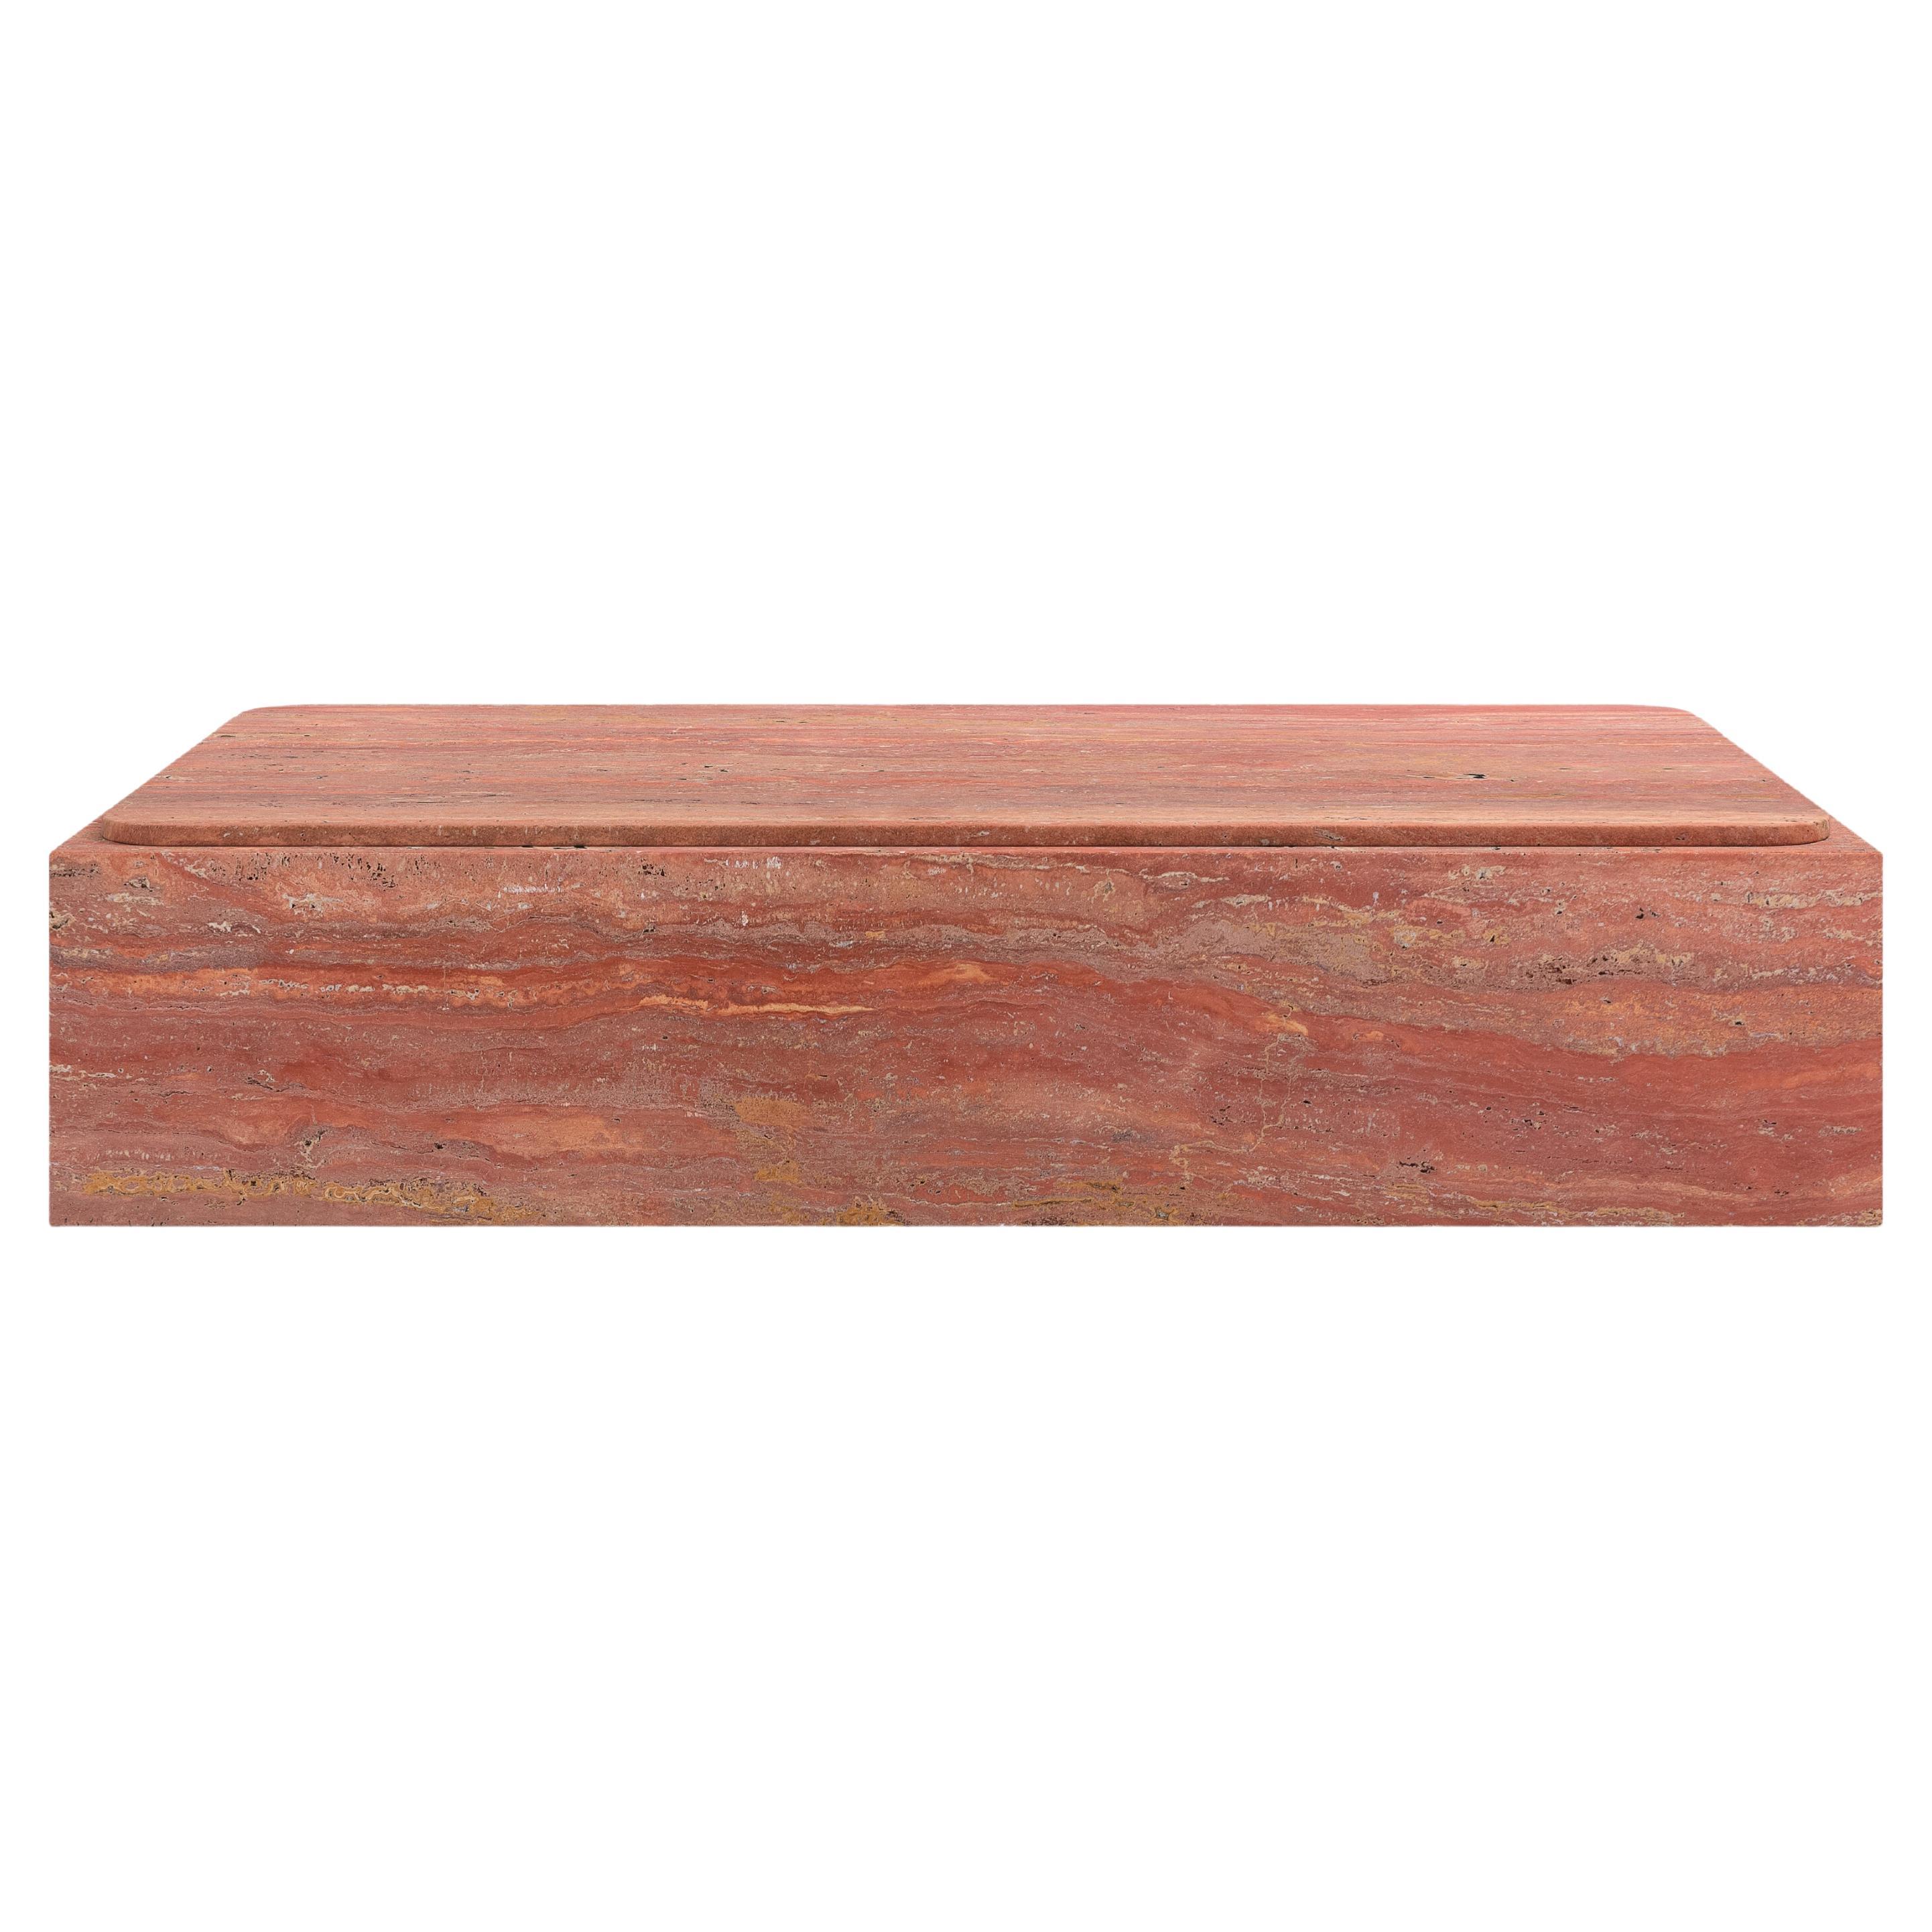 FORM(LA) Cubo Rectangle Plinth Coffee Table 48”L x 30”W x 13”H Travertino Rosso  For Sale